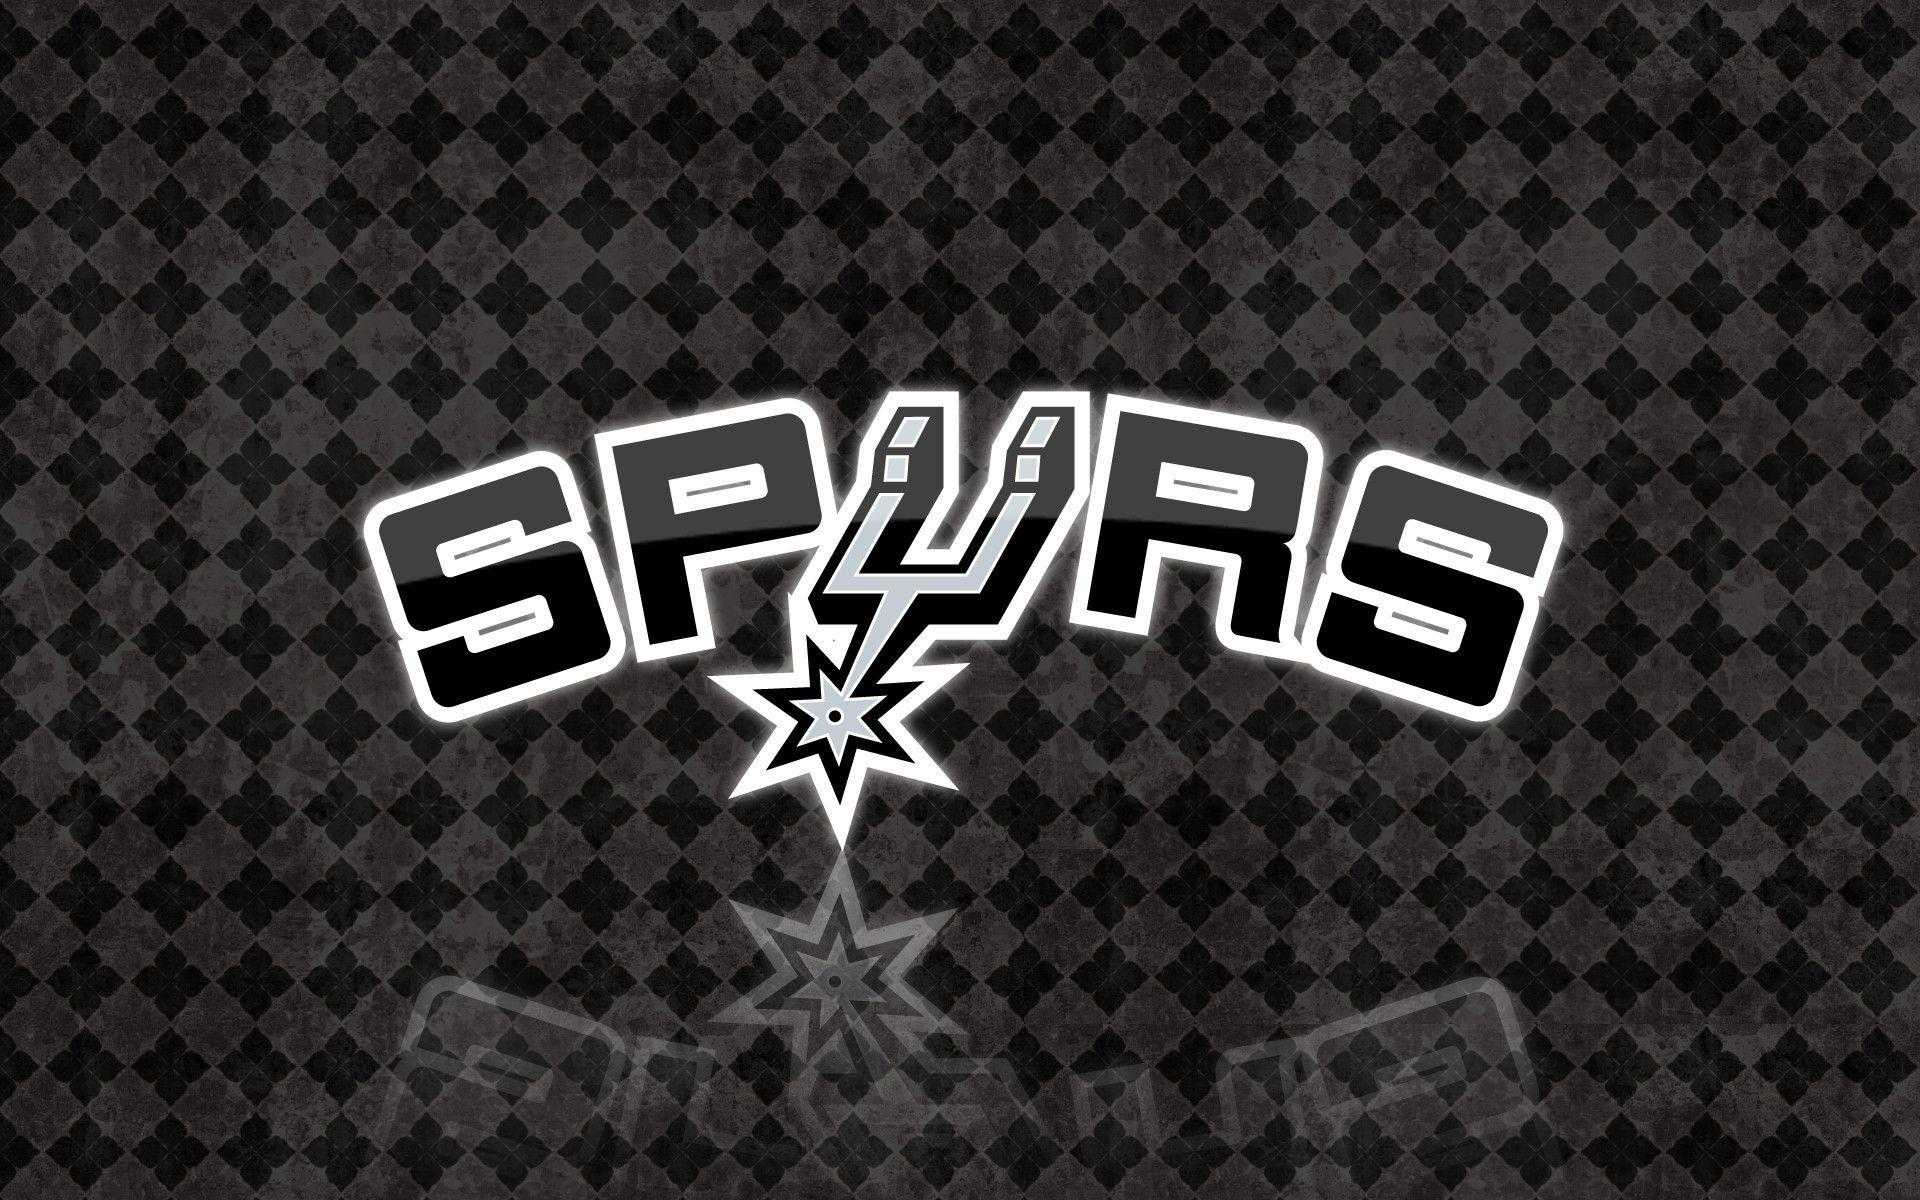 San Antonio Spurs Wallpaper 4k Desktop For iPhone HD Image